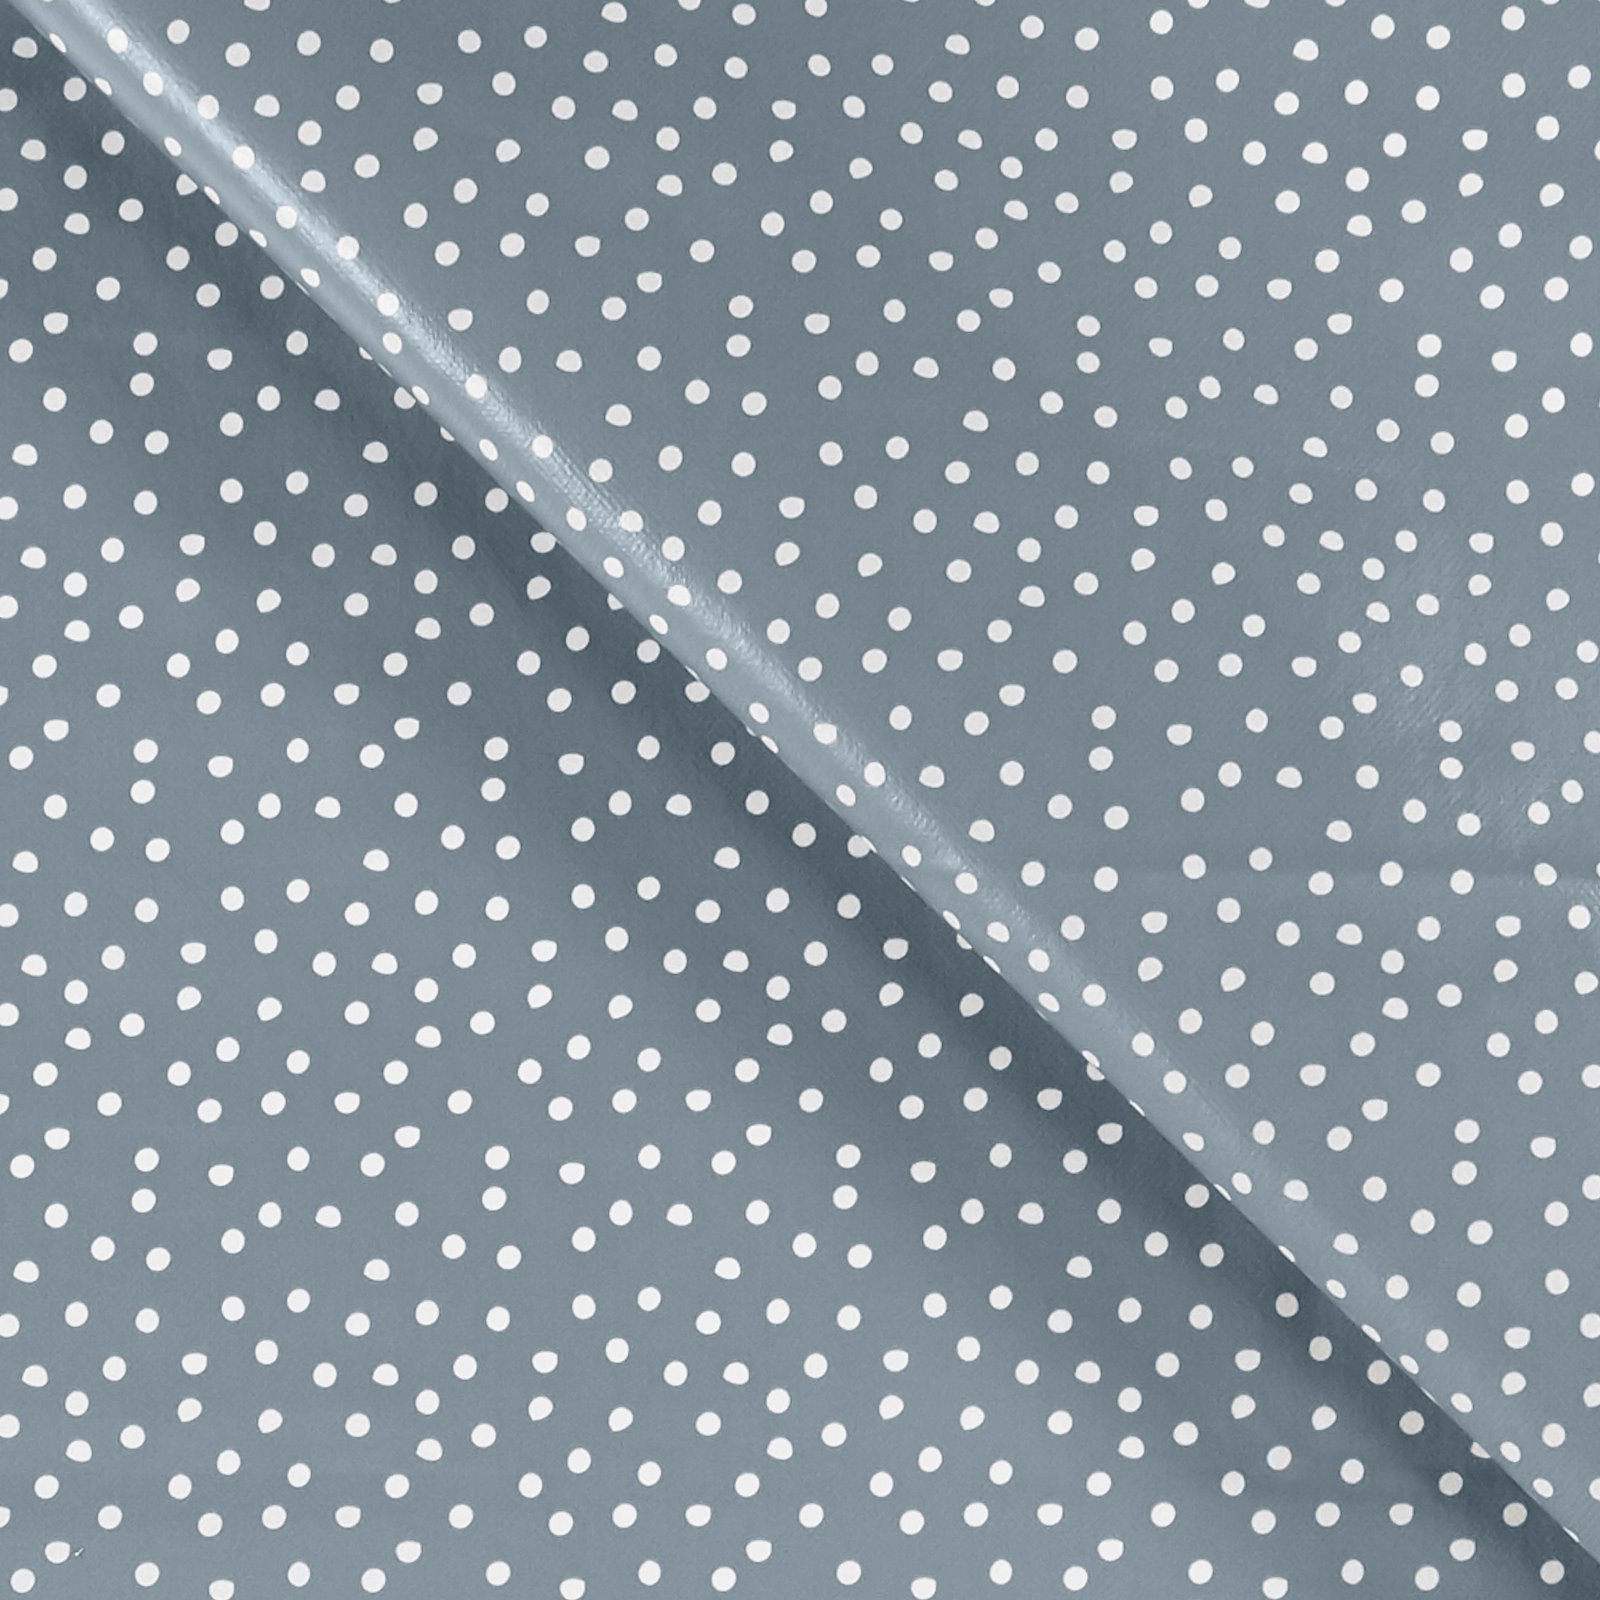 Non-woven oilcloth l blue w white dots 866116_pack